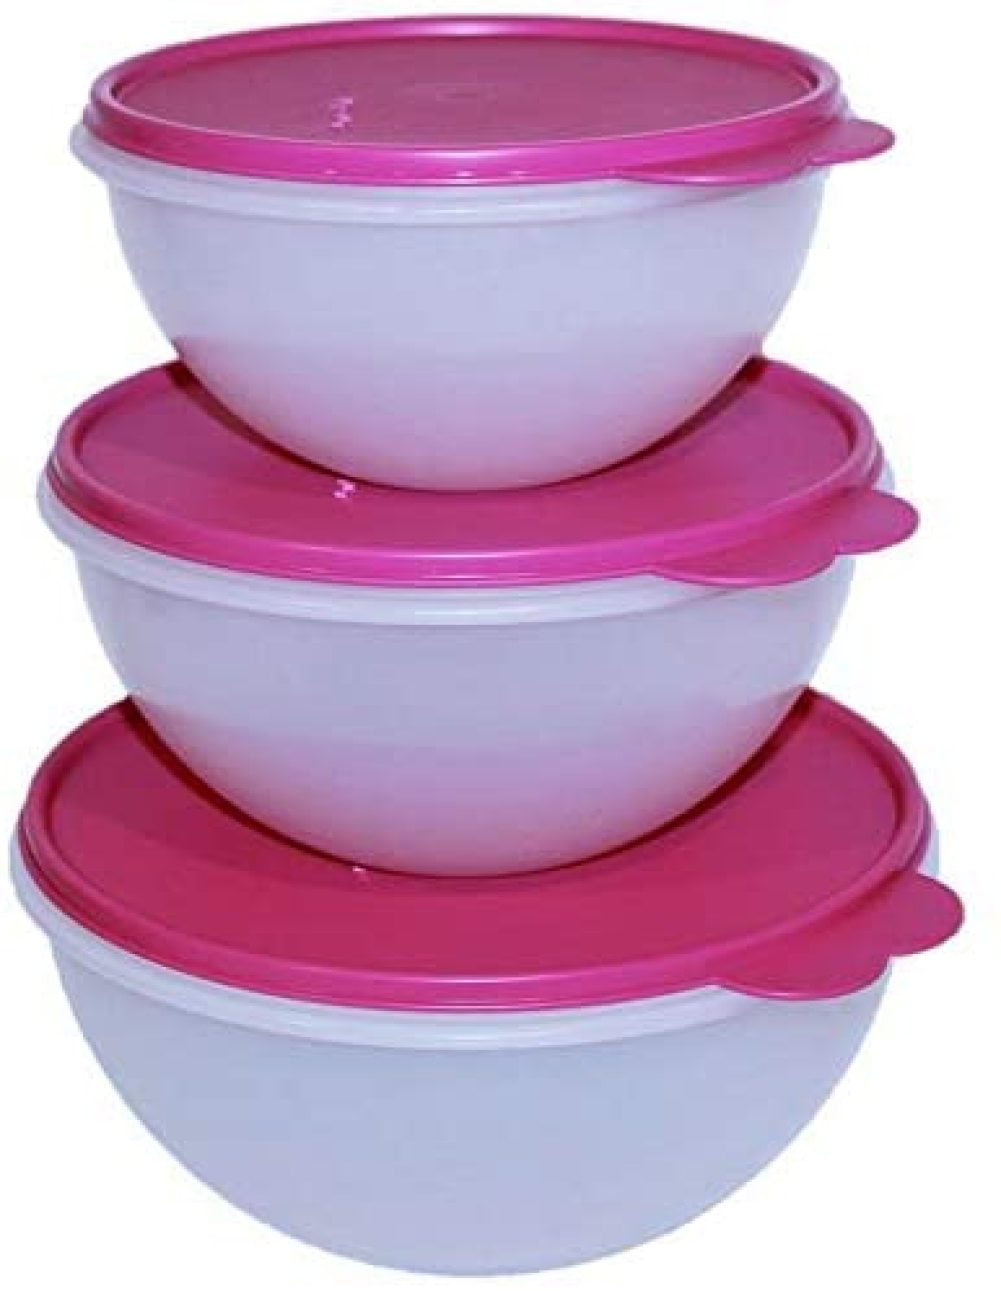 Tupperware Wonderlier Bowl Set Mixing Serving Storage Bowls Set of 4 New 